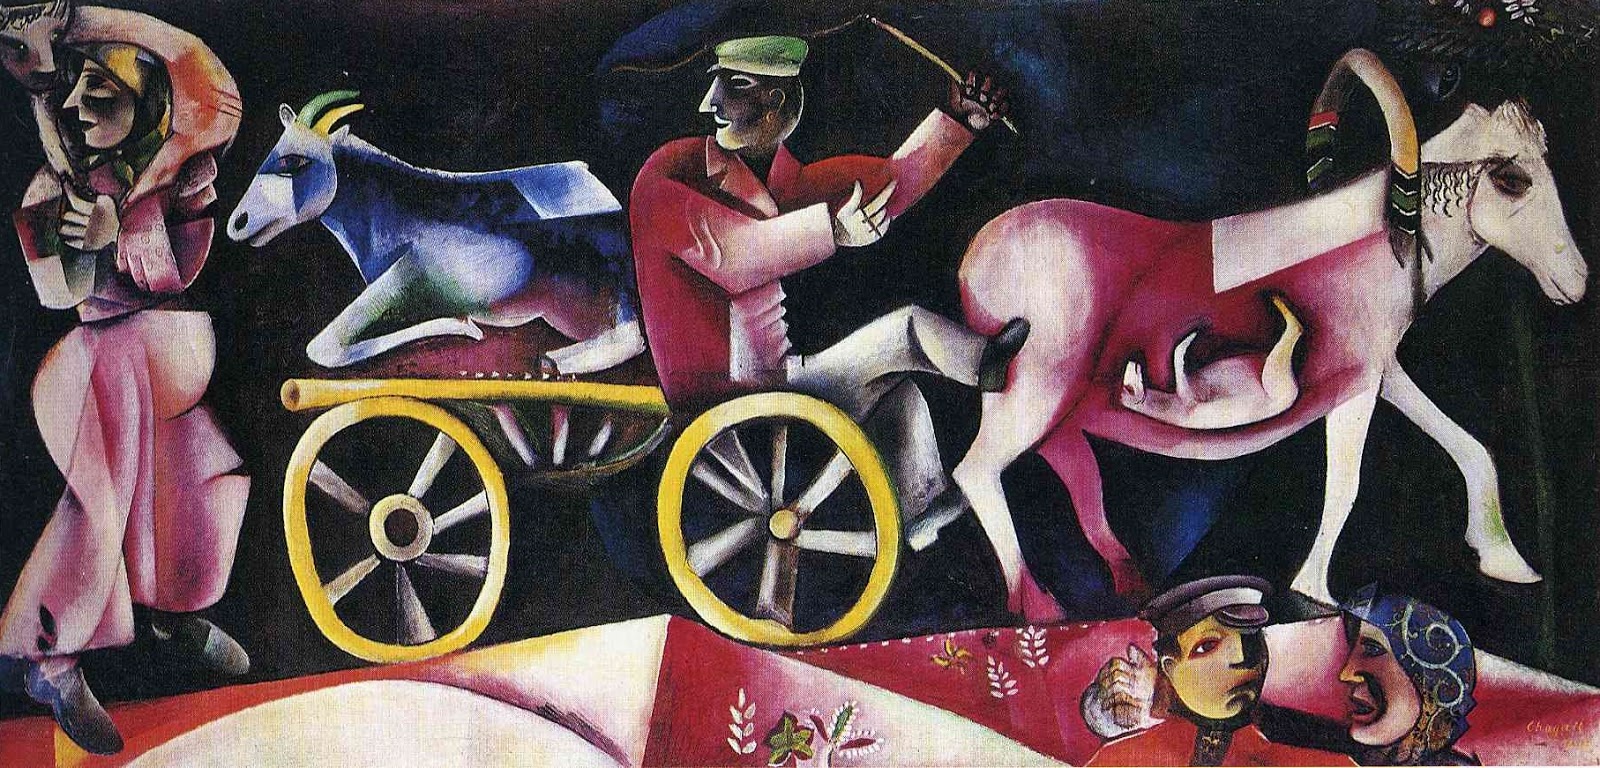 Marc+Chagall-1887-1985 (417).jpg